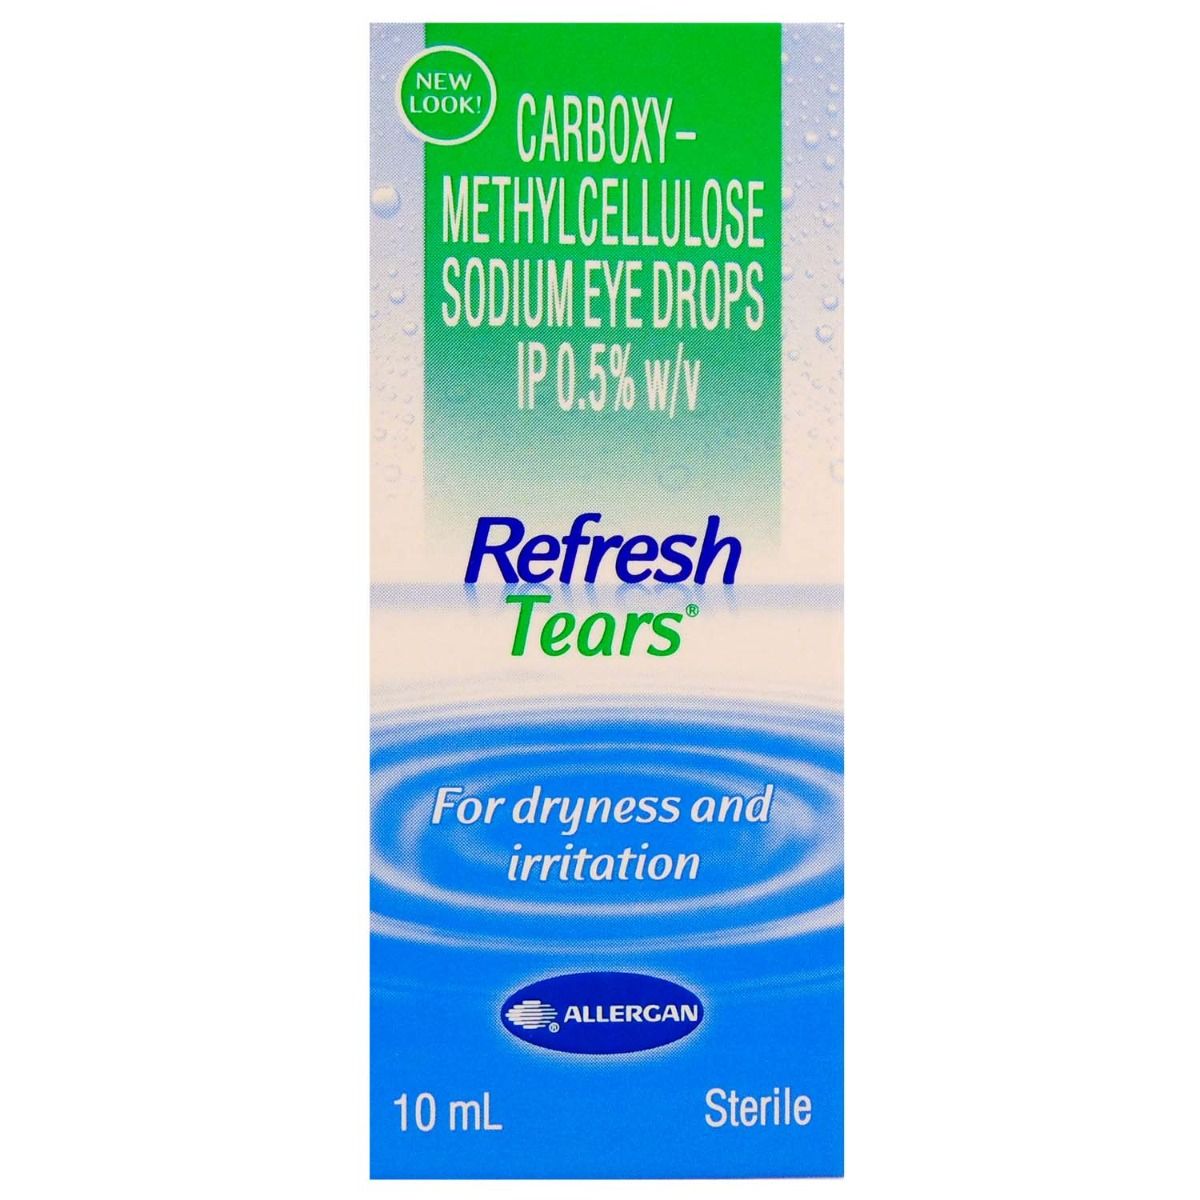 Refresh Tears Eye Drops 10 ml, Pack of 1 EYE DROPS